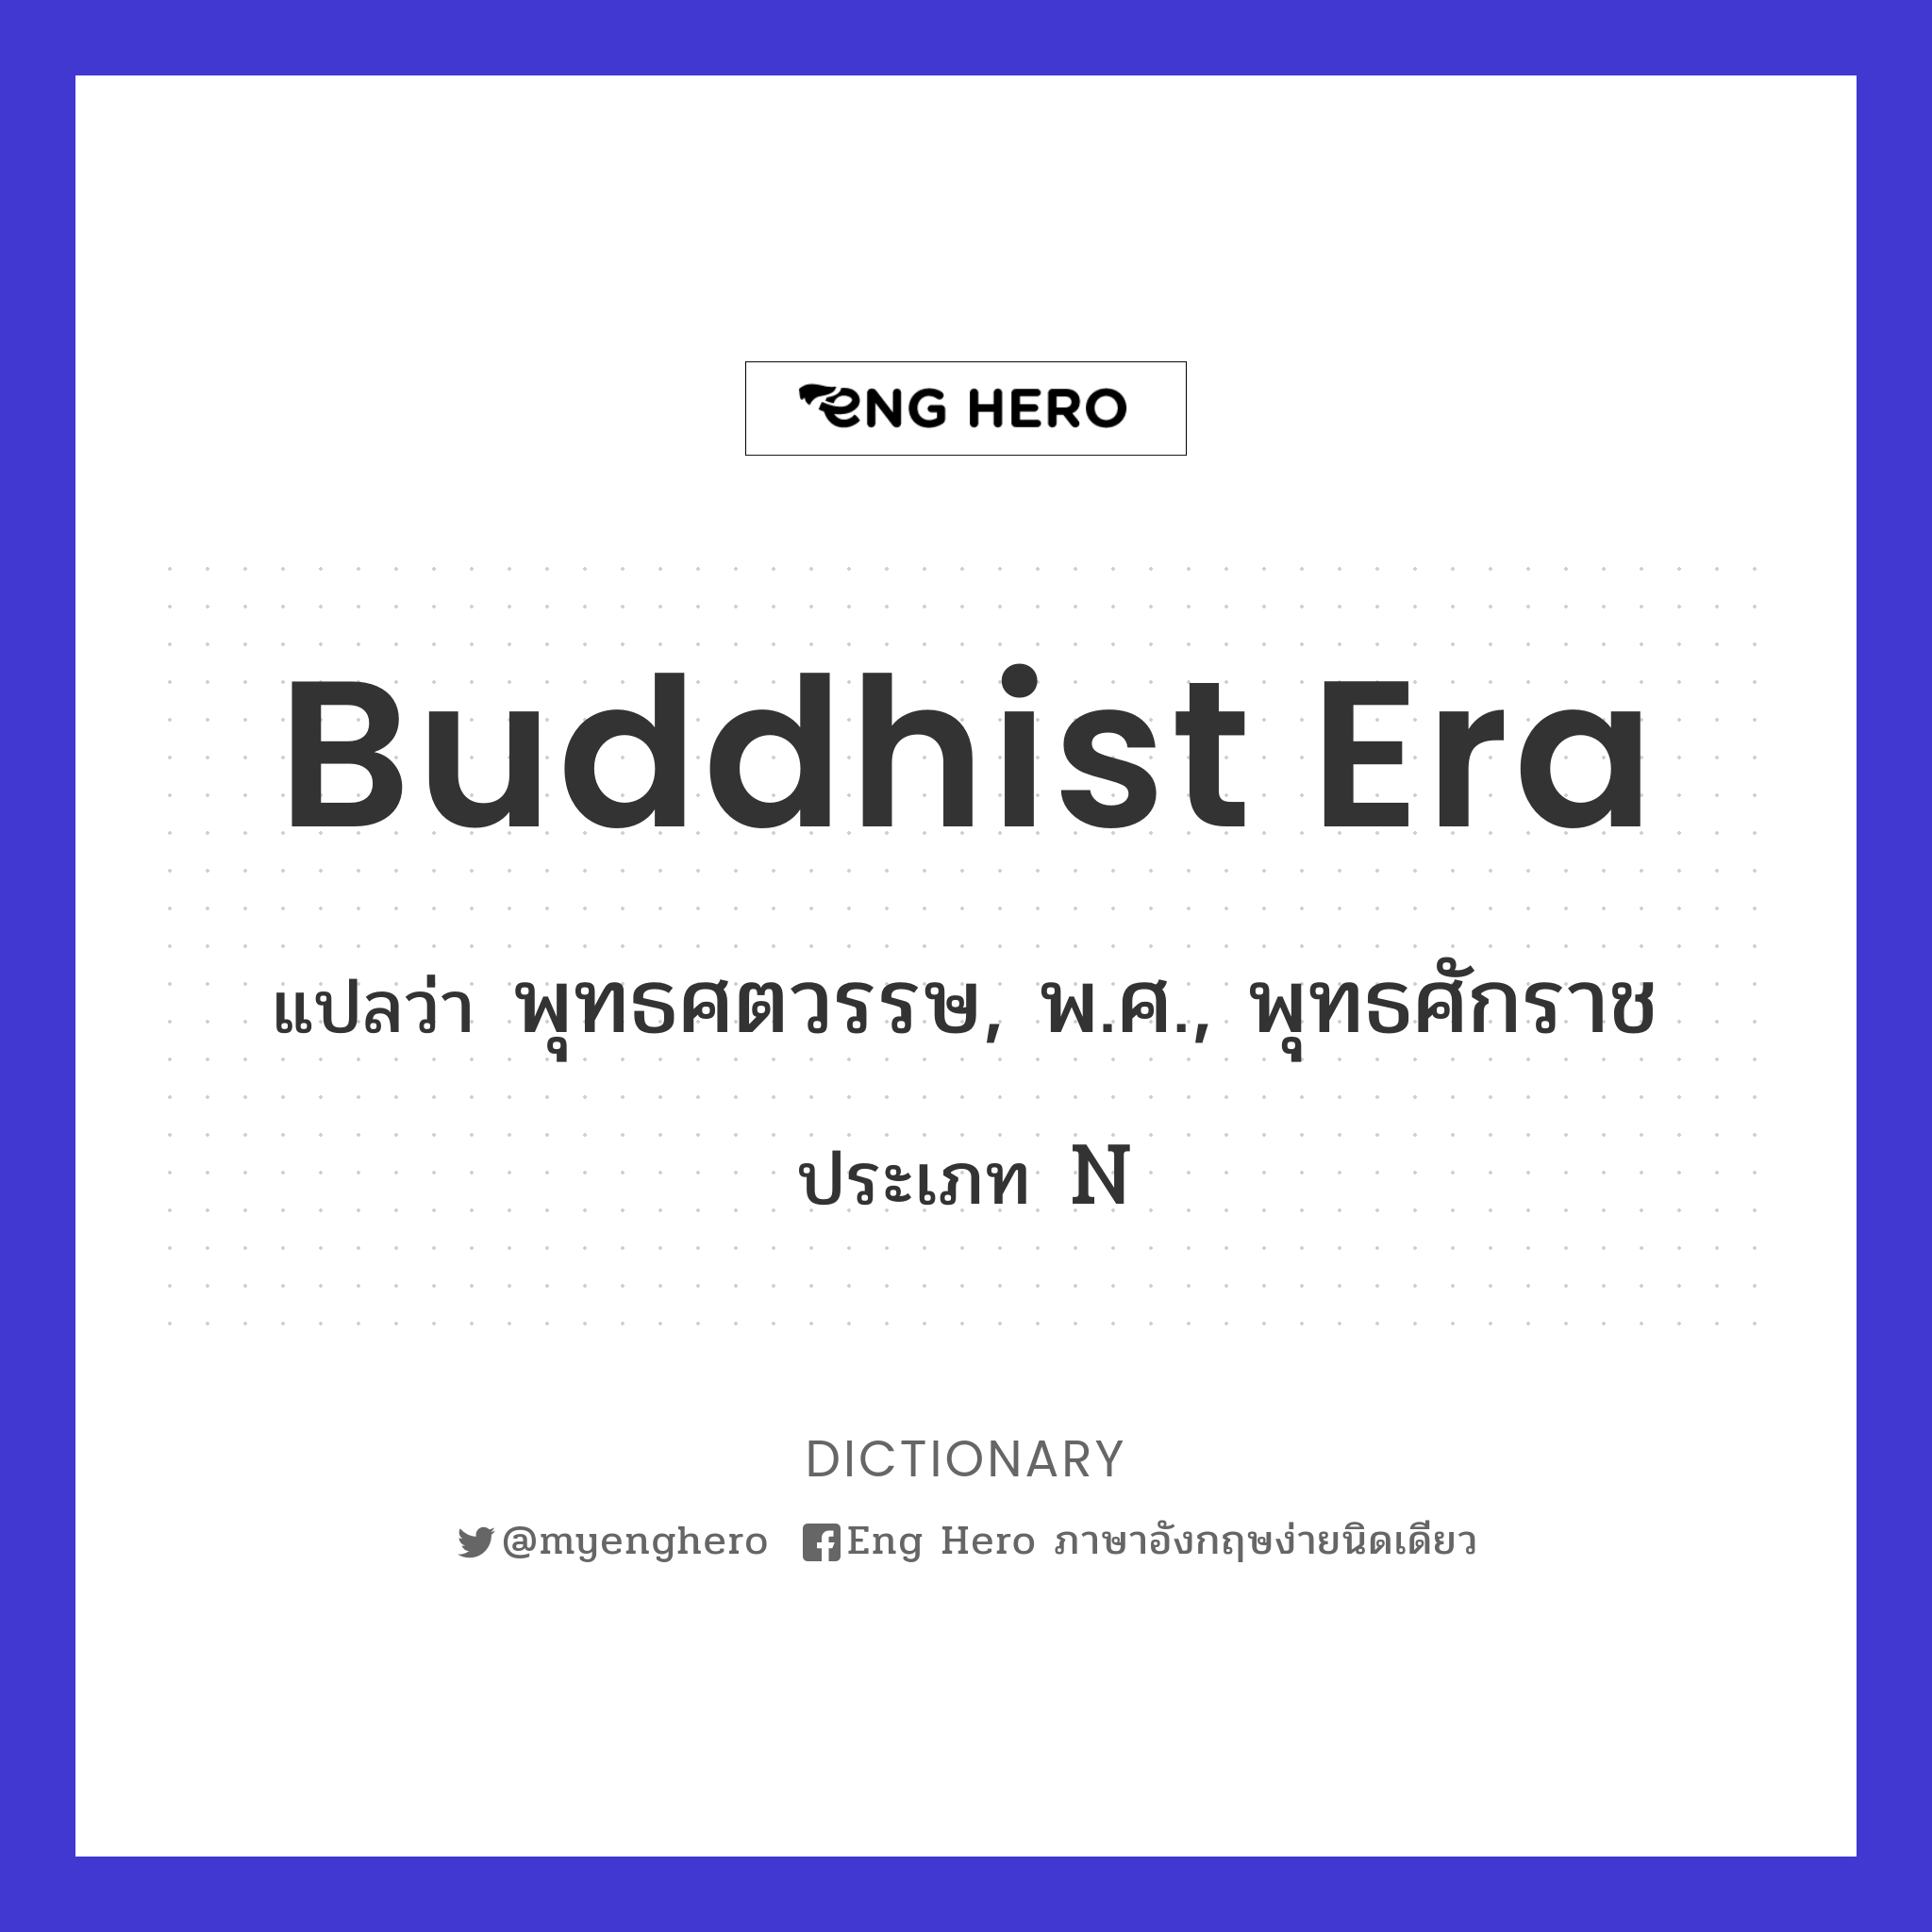 Buddhist era